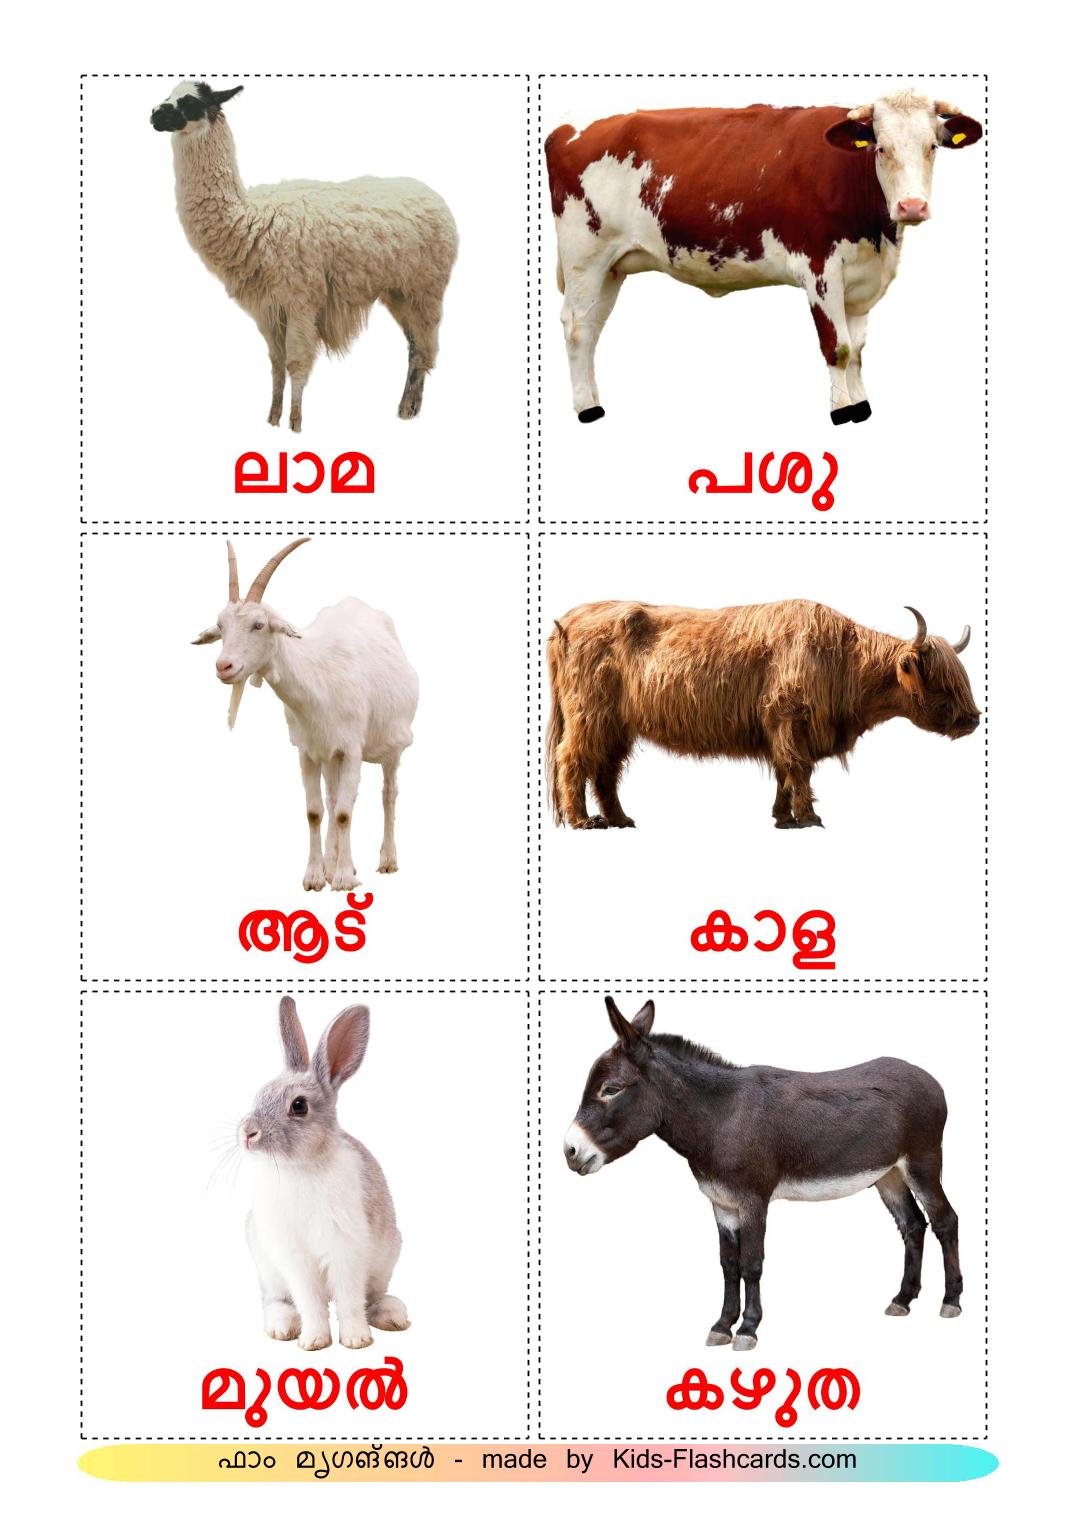 Animali da fattoria - 15 flashcards malayalam stampabili gratuitamente